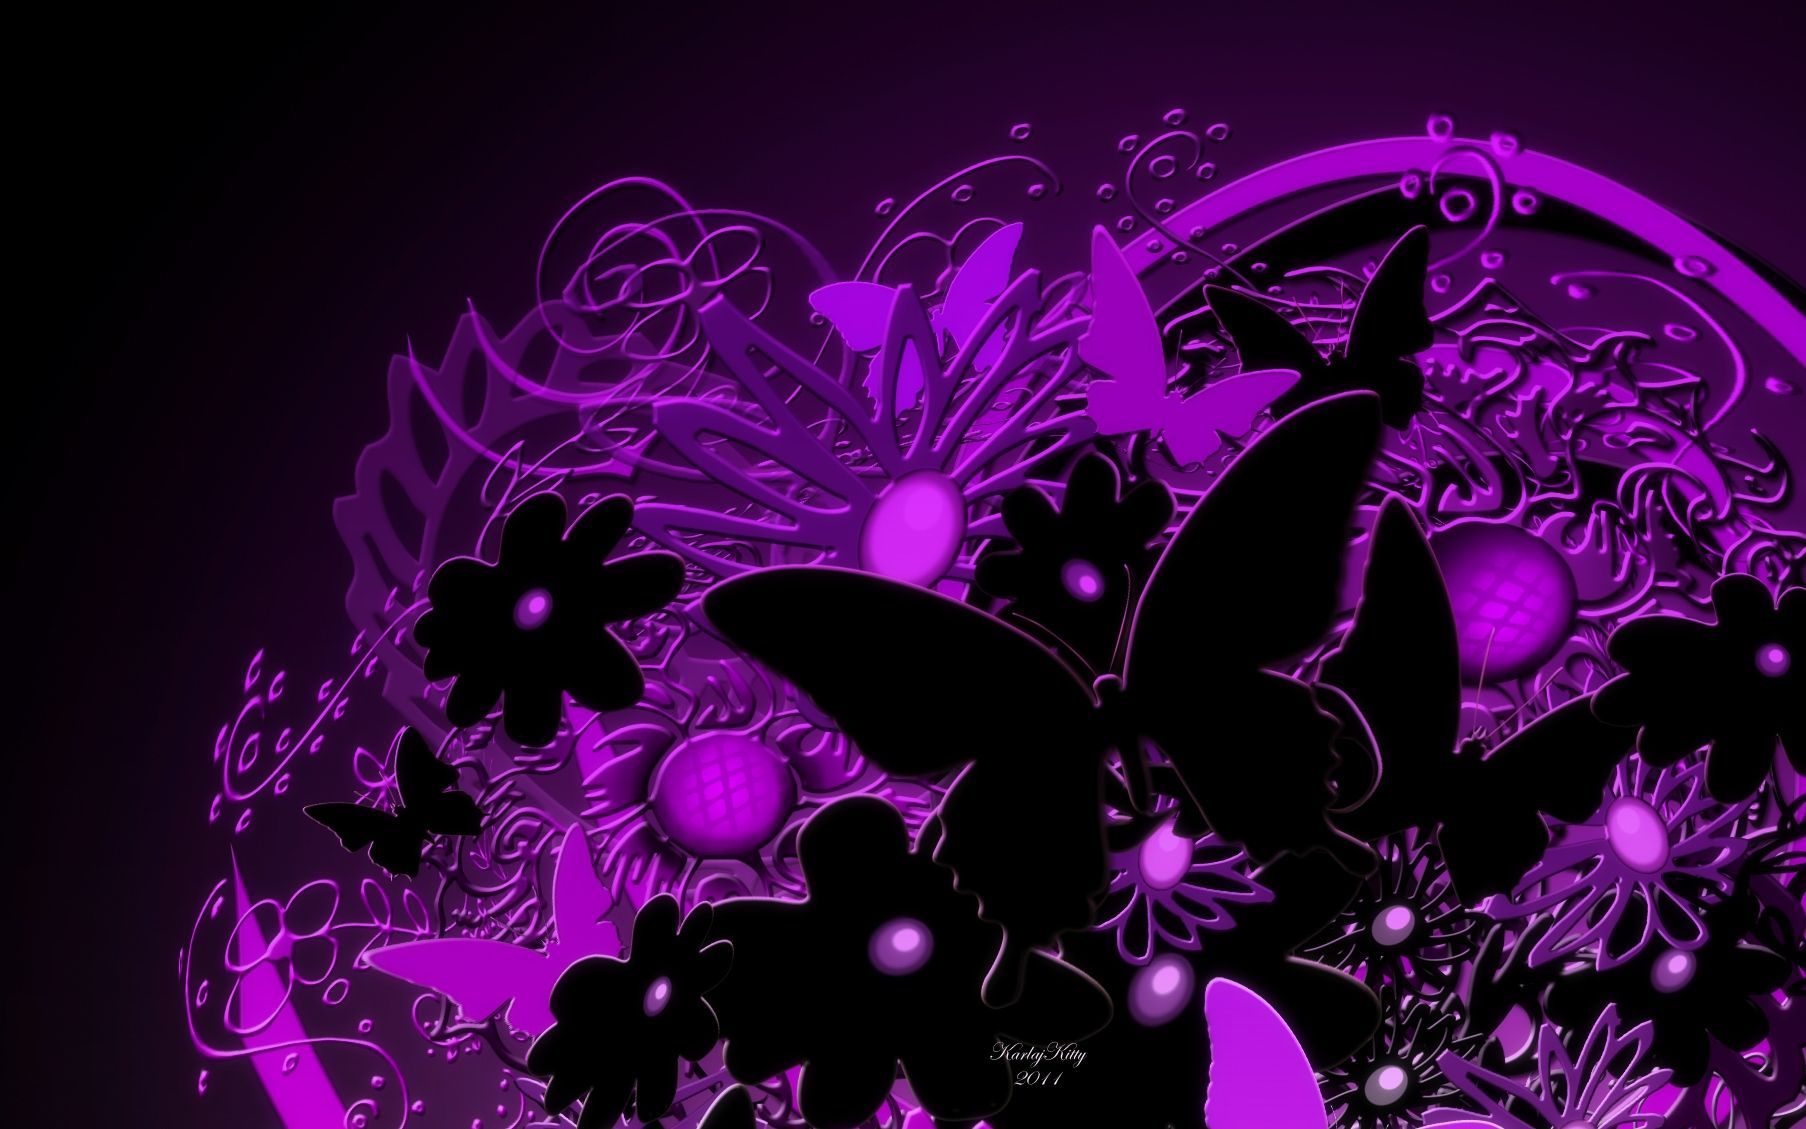 Black Women And Purple Butterflies Wallpapers - Wallpaper Cave